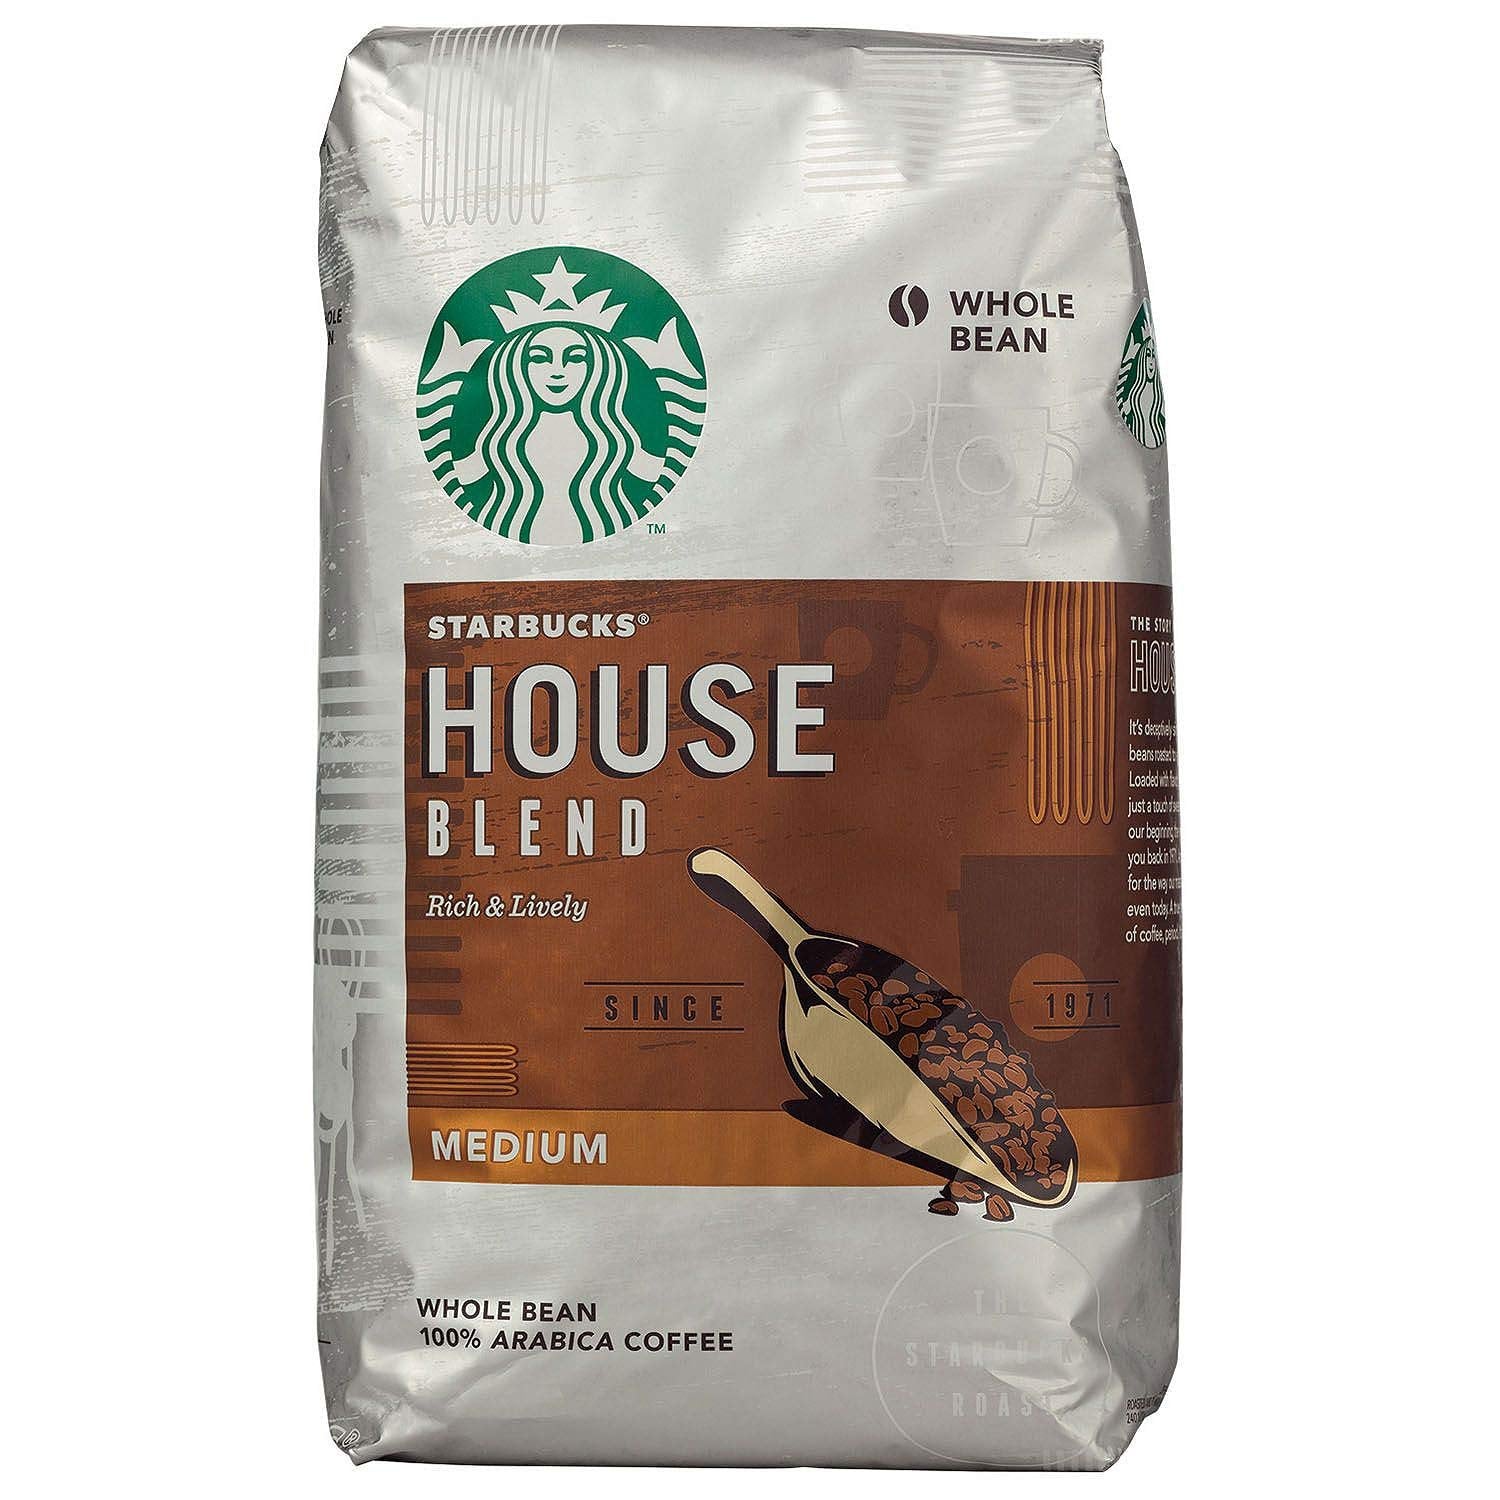 Starbucks House Blend Coffee Whole Bean 40 oz